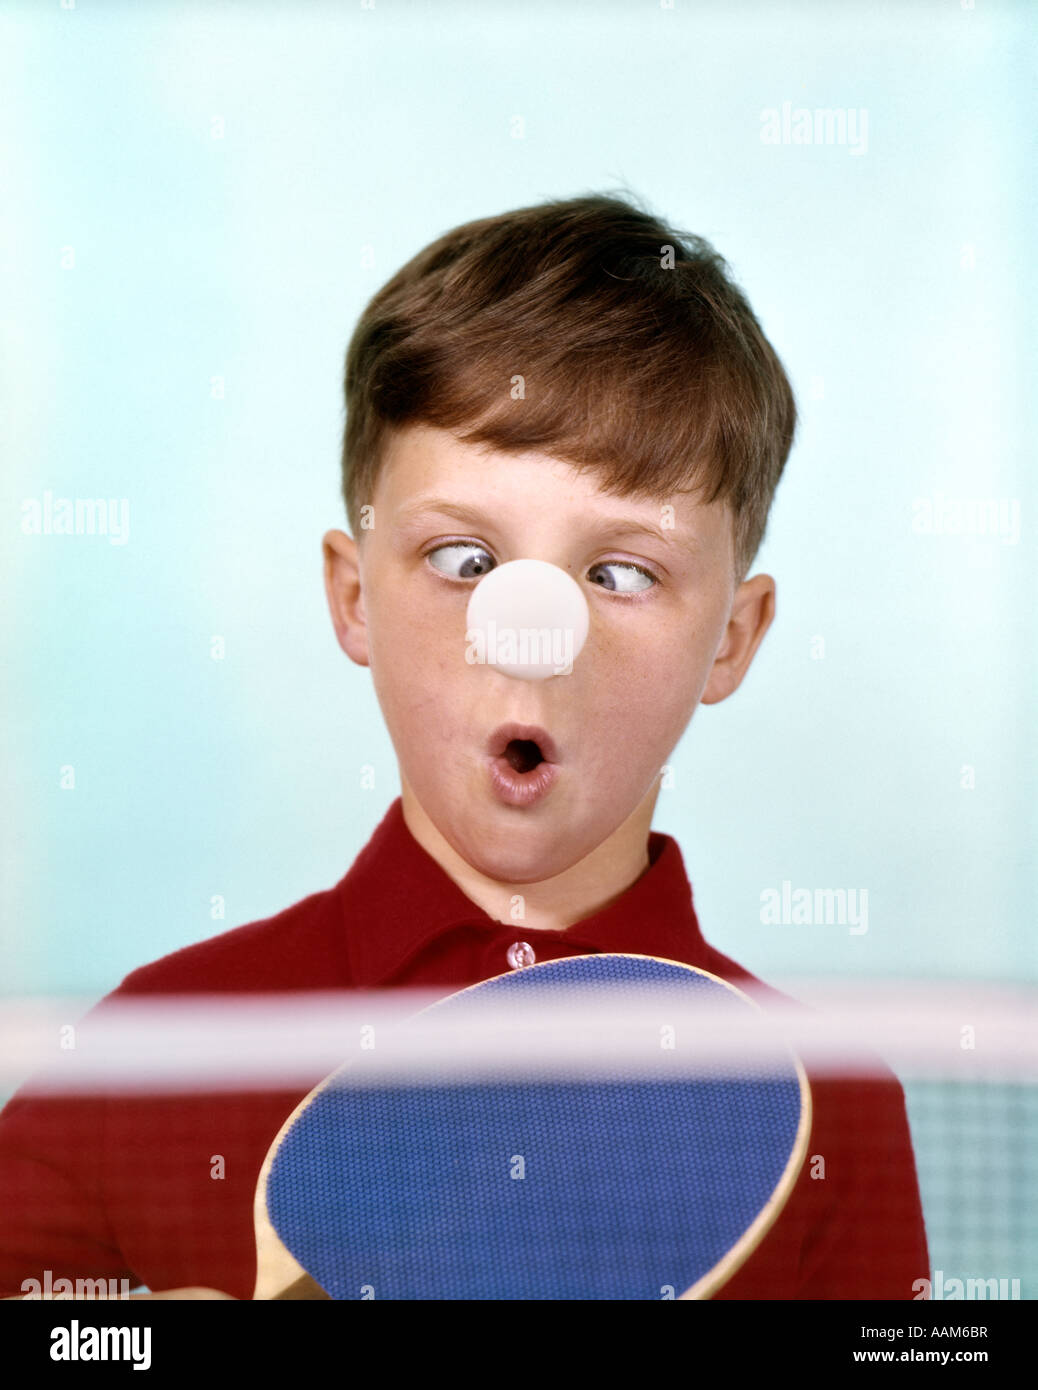 1970 1960 FUNNY CROSS-eyed BOY CAMISETA ROJA PING PONG Bola atascada en la  nariz HUMOR Fotografía de stock - Alamy